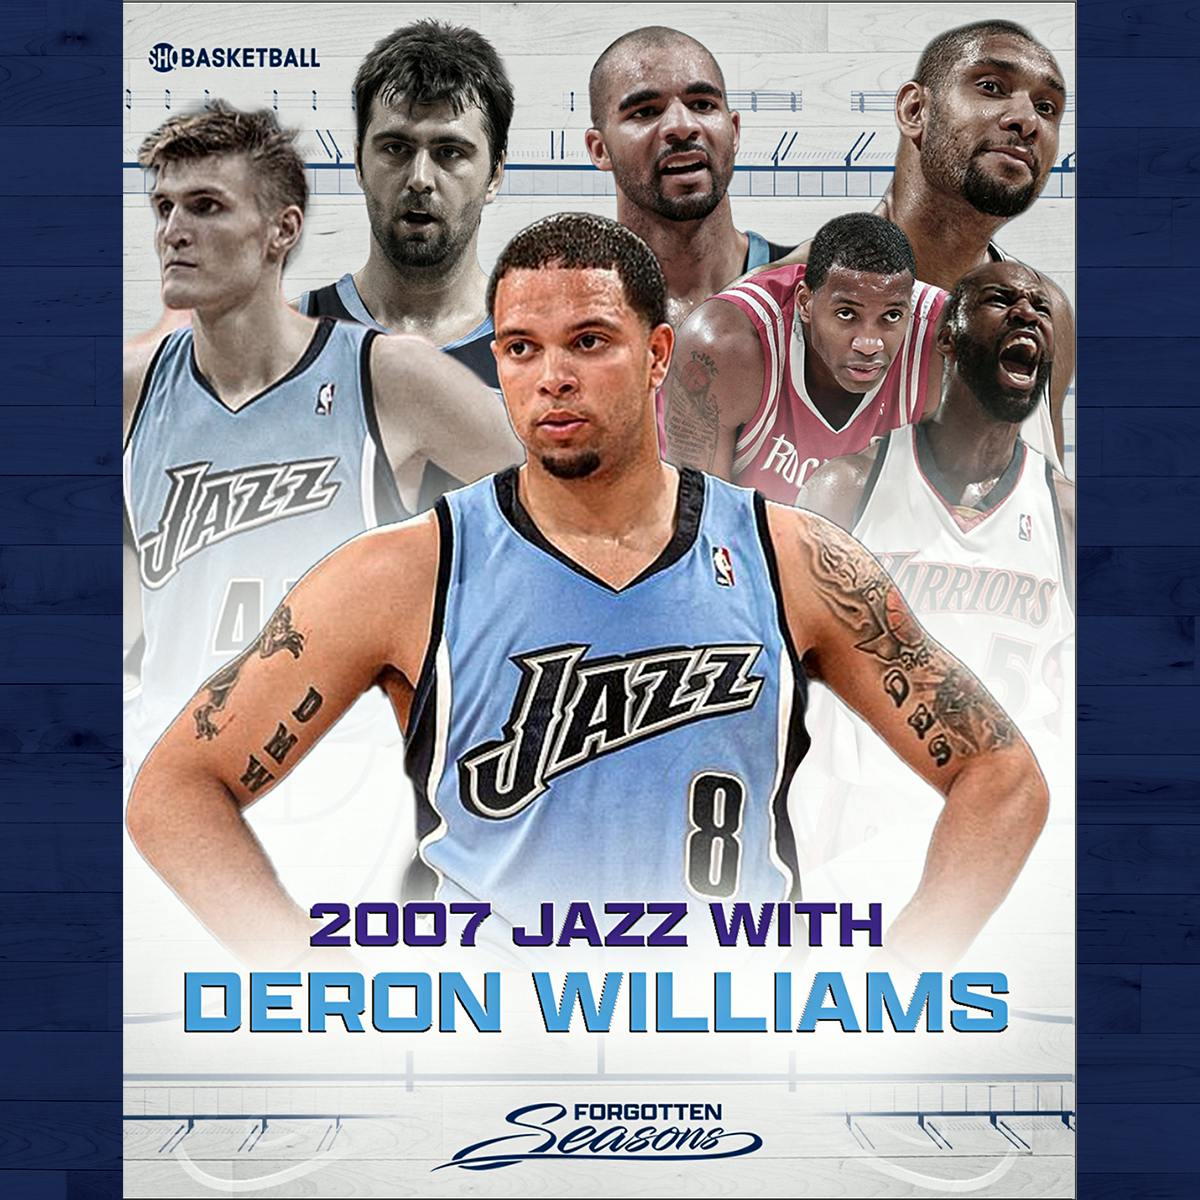 Deron Williams on the 2007 Jazz